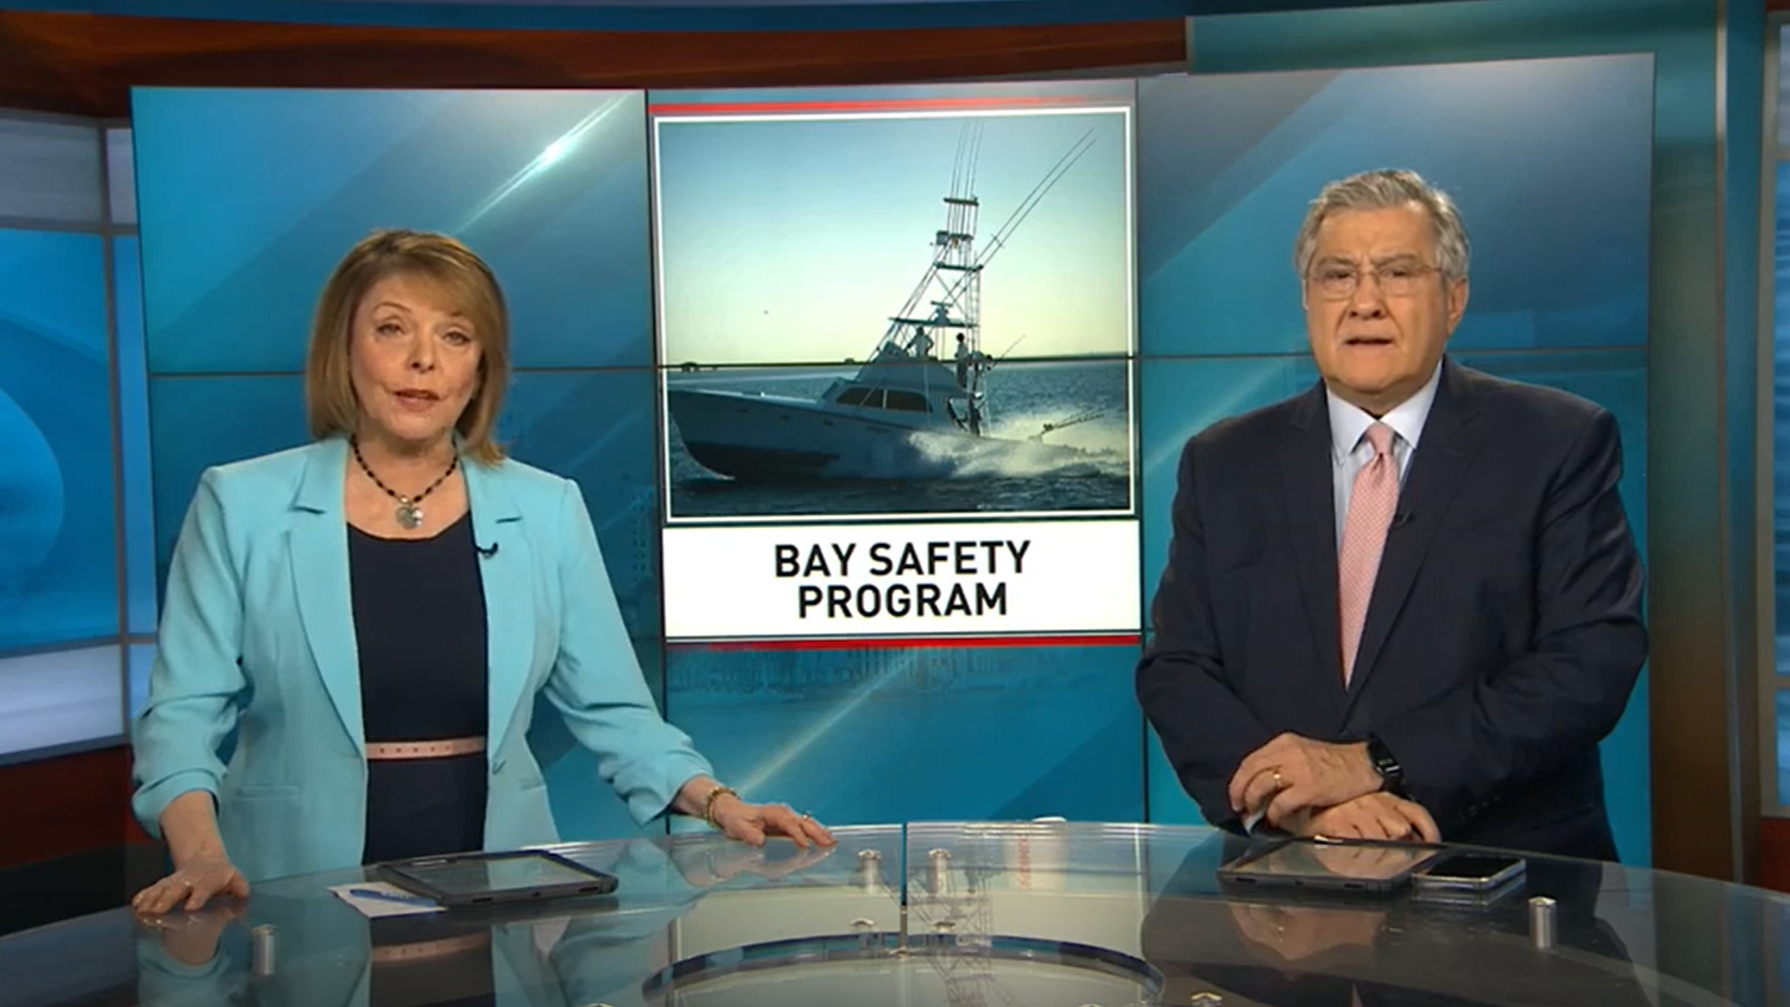 WJAR: Group creates web program showing live bay activity following boat tragedy